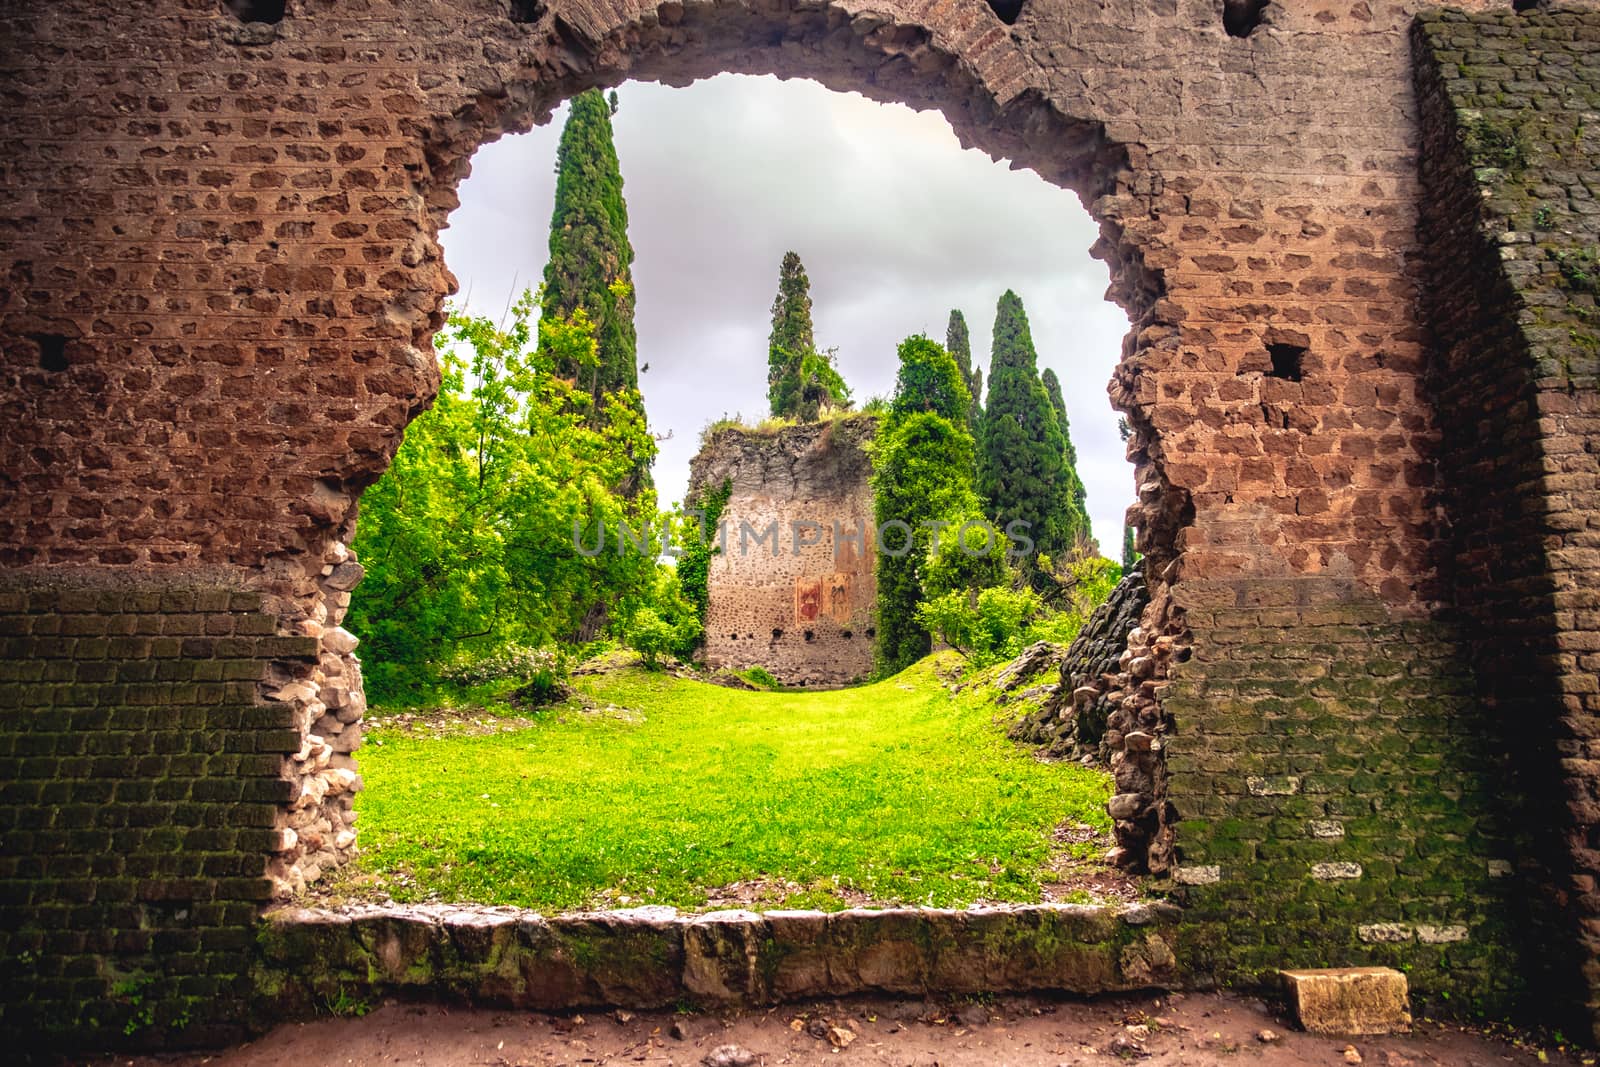 church ruins in the Giardino della Ninfa or nymph garden in Latina - Lazio - Italy by LucaLorenzelli